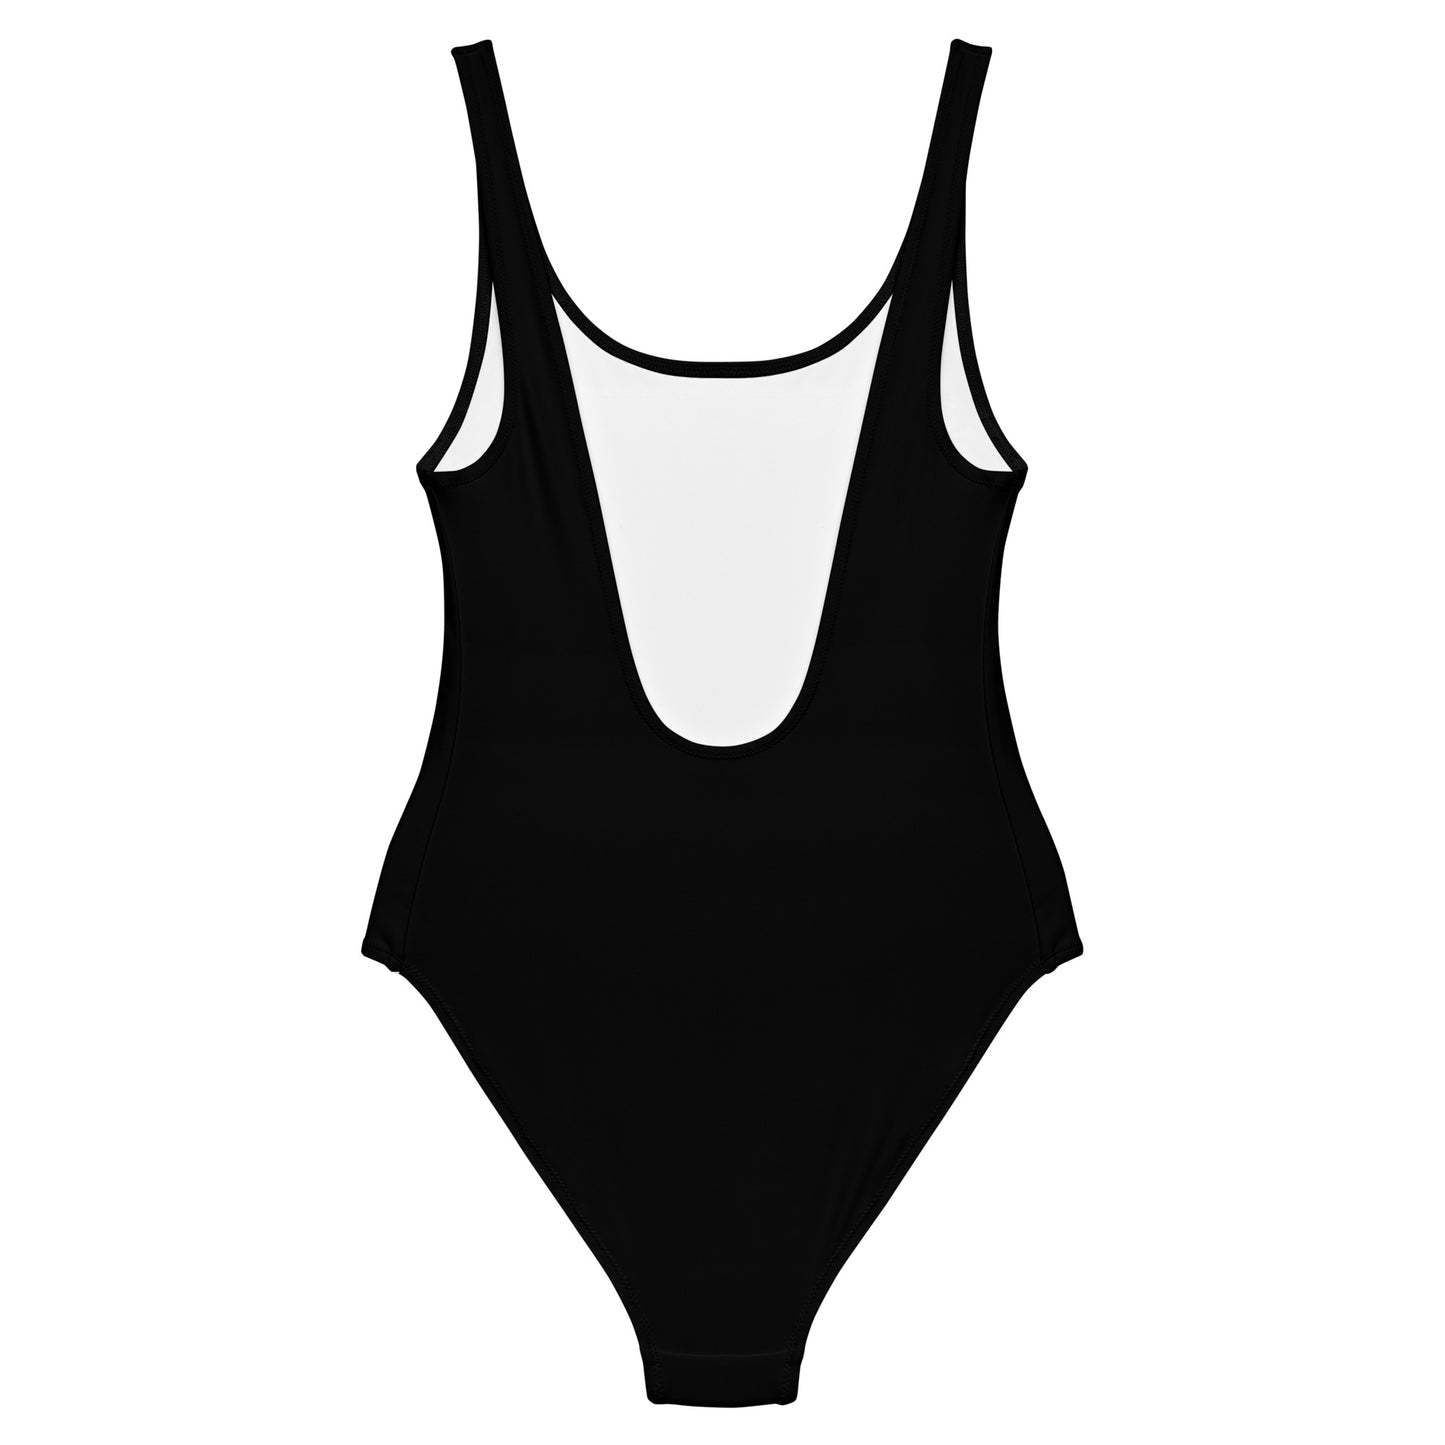 LEGACY One-Piece Swimsuit - Black | White Shark